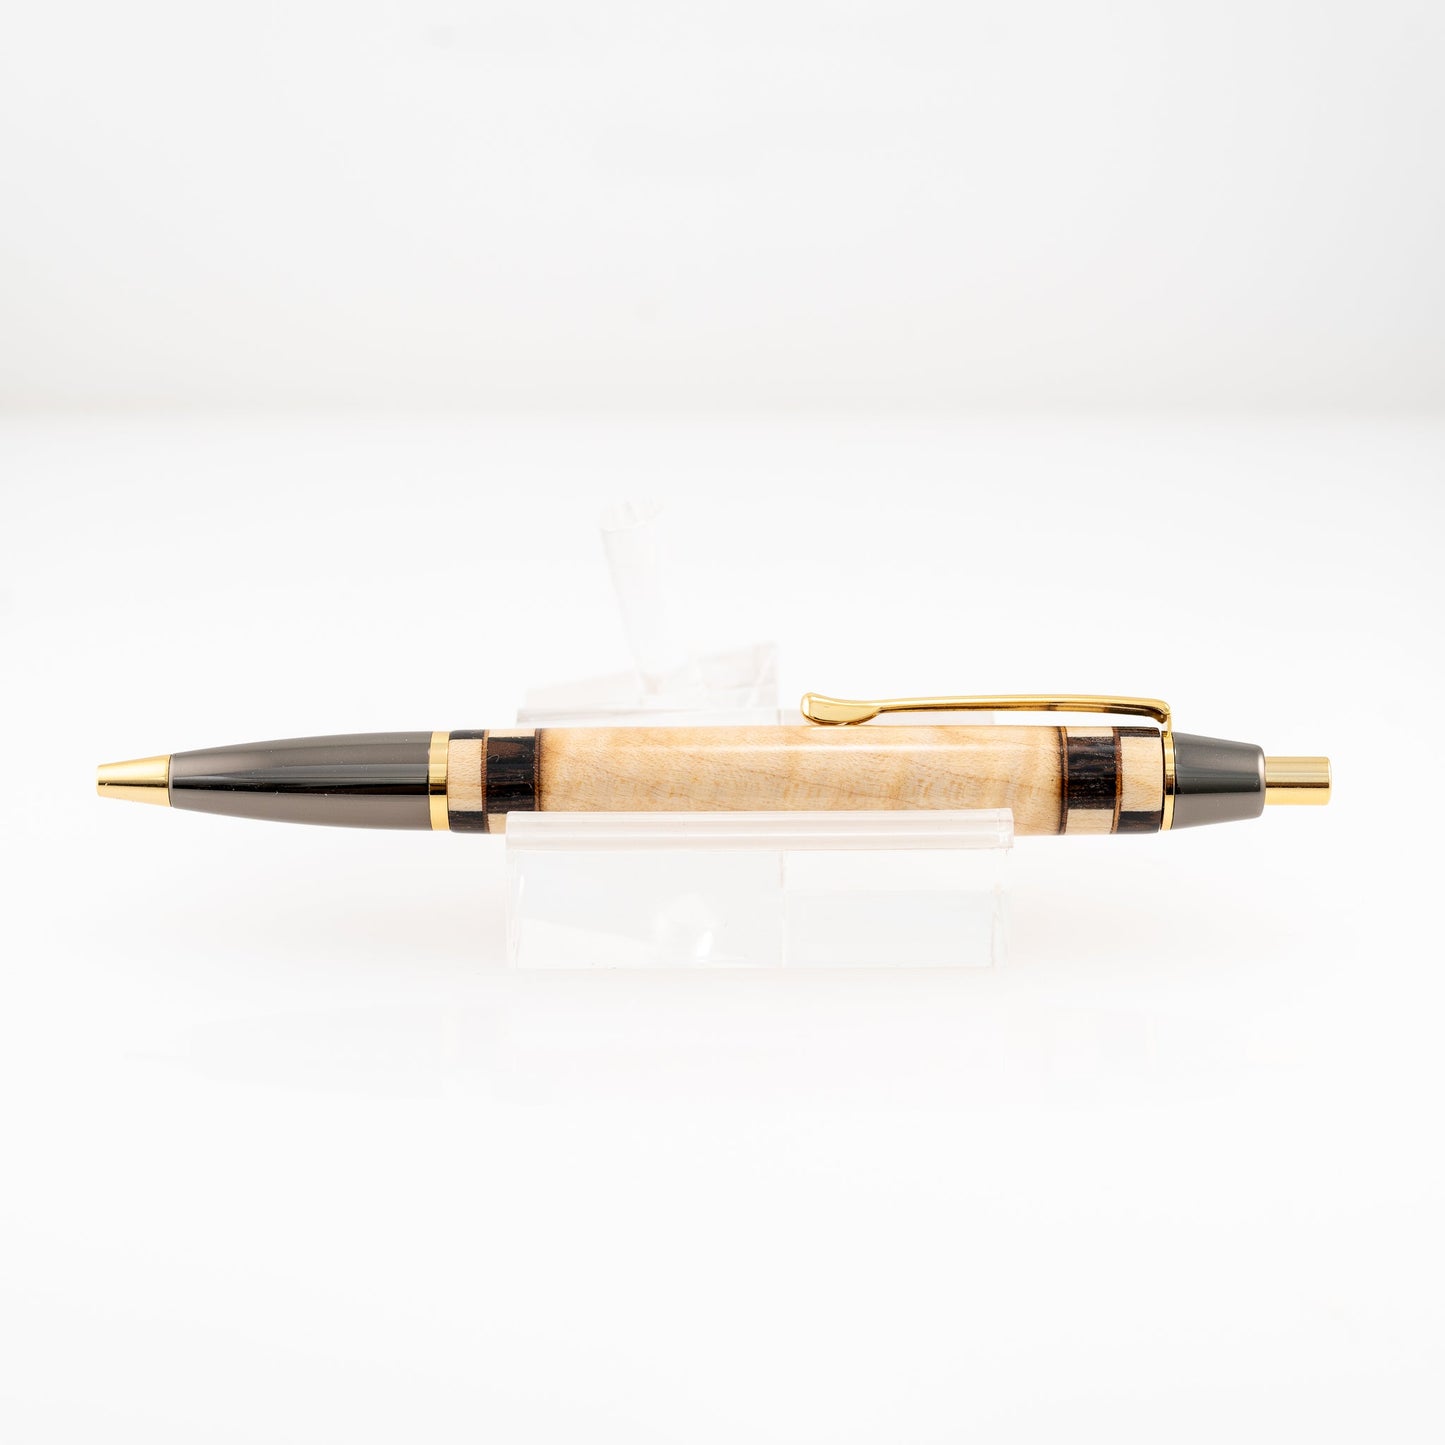 Handmade maple and wenge segmented click ballpoint pen